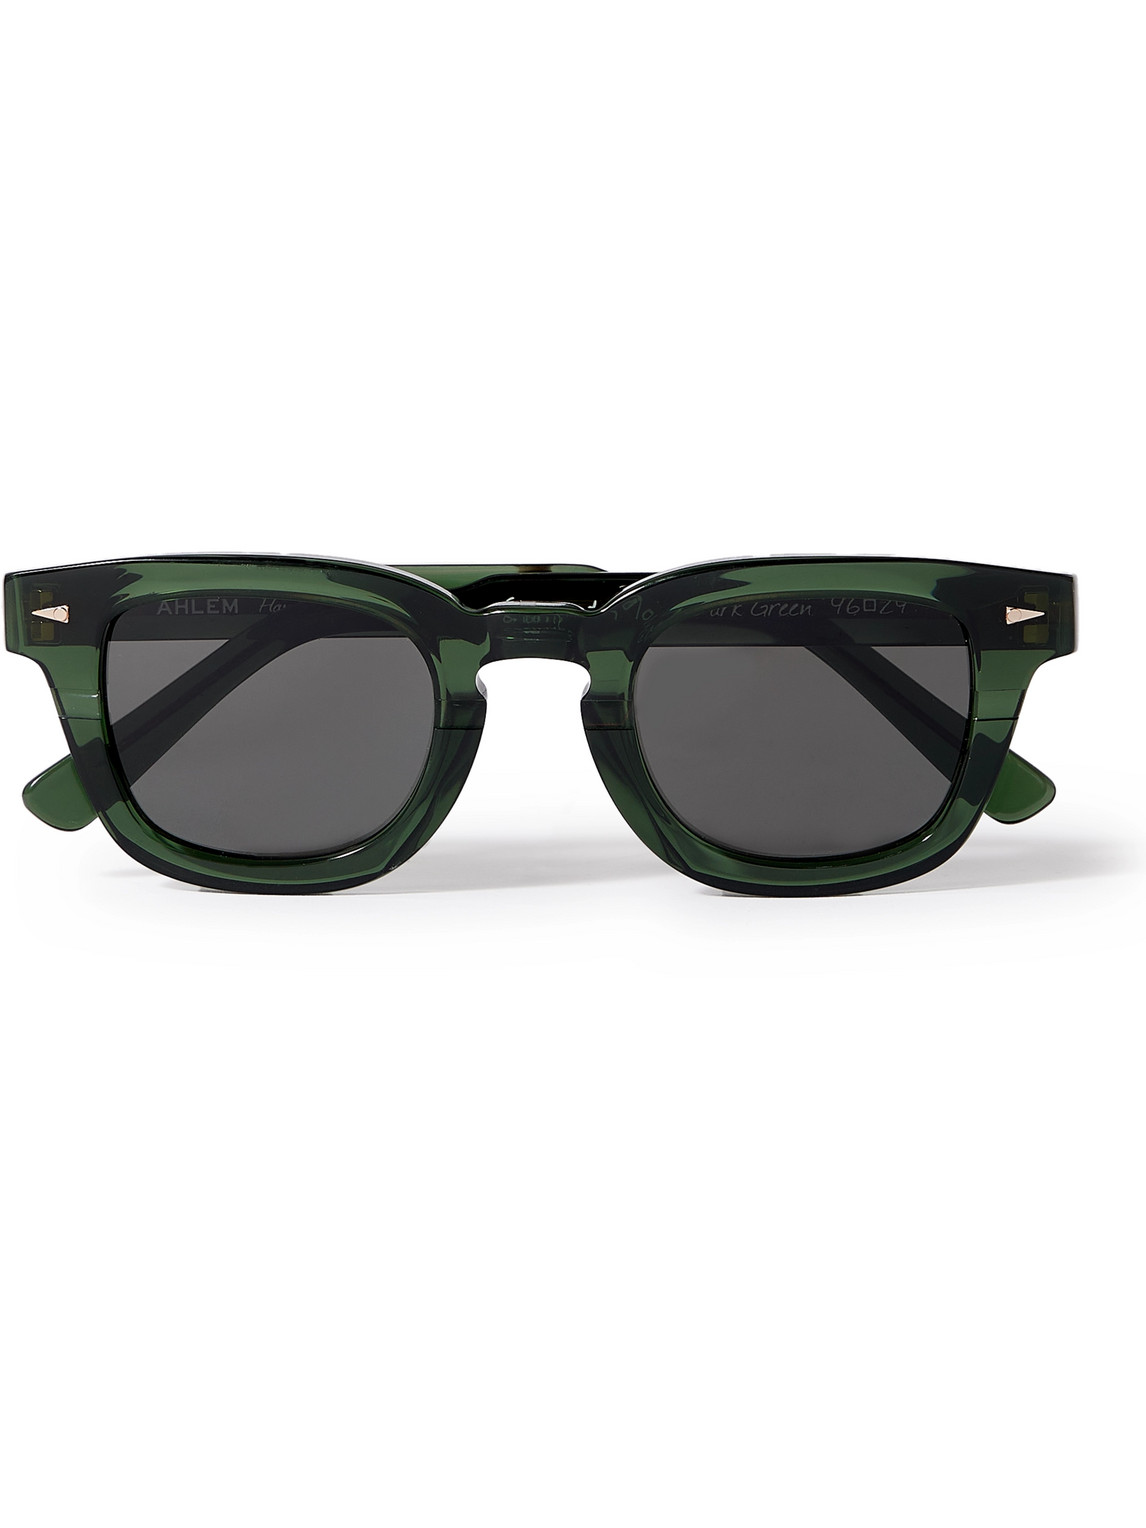 Ahlem Champ De Mars D-frame Acetate Sunglasses In Green